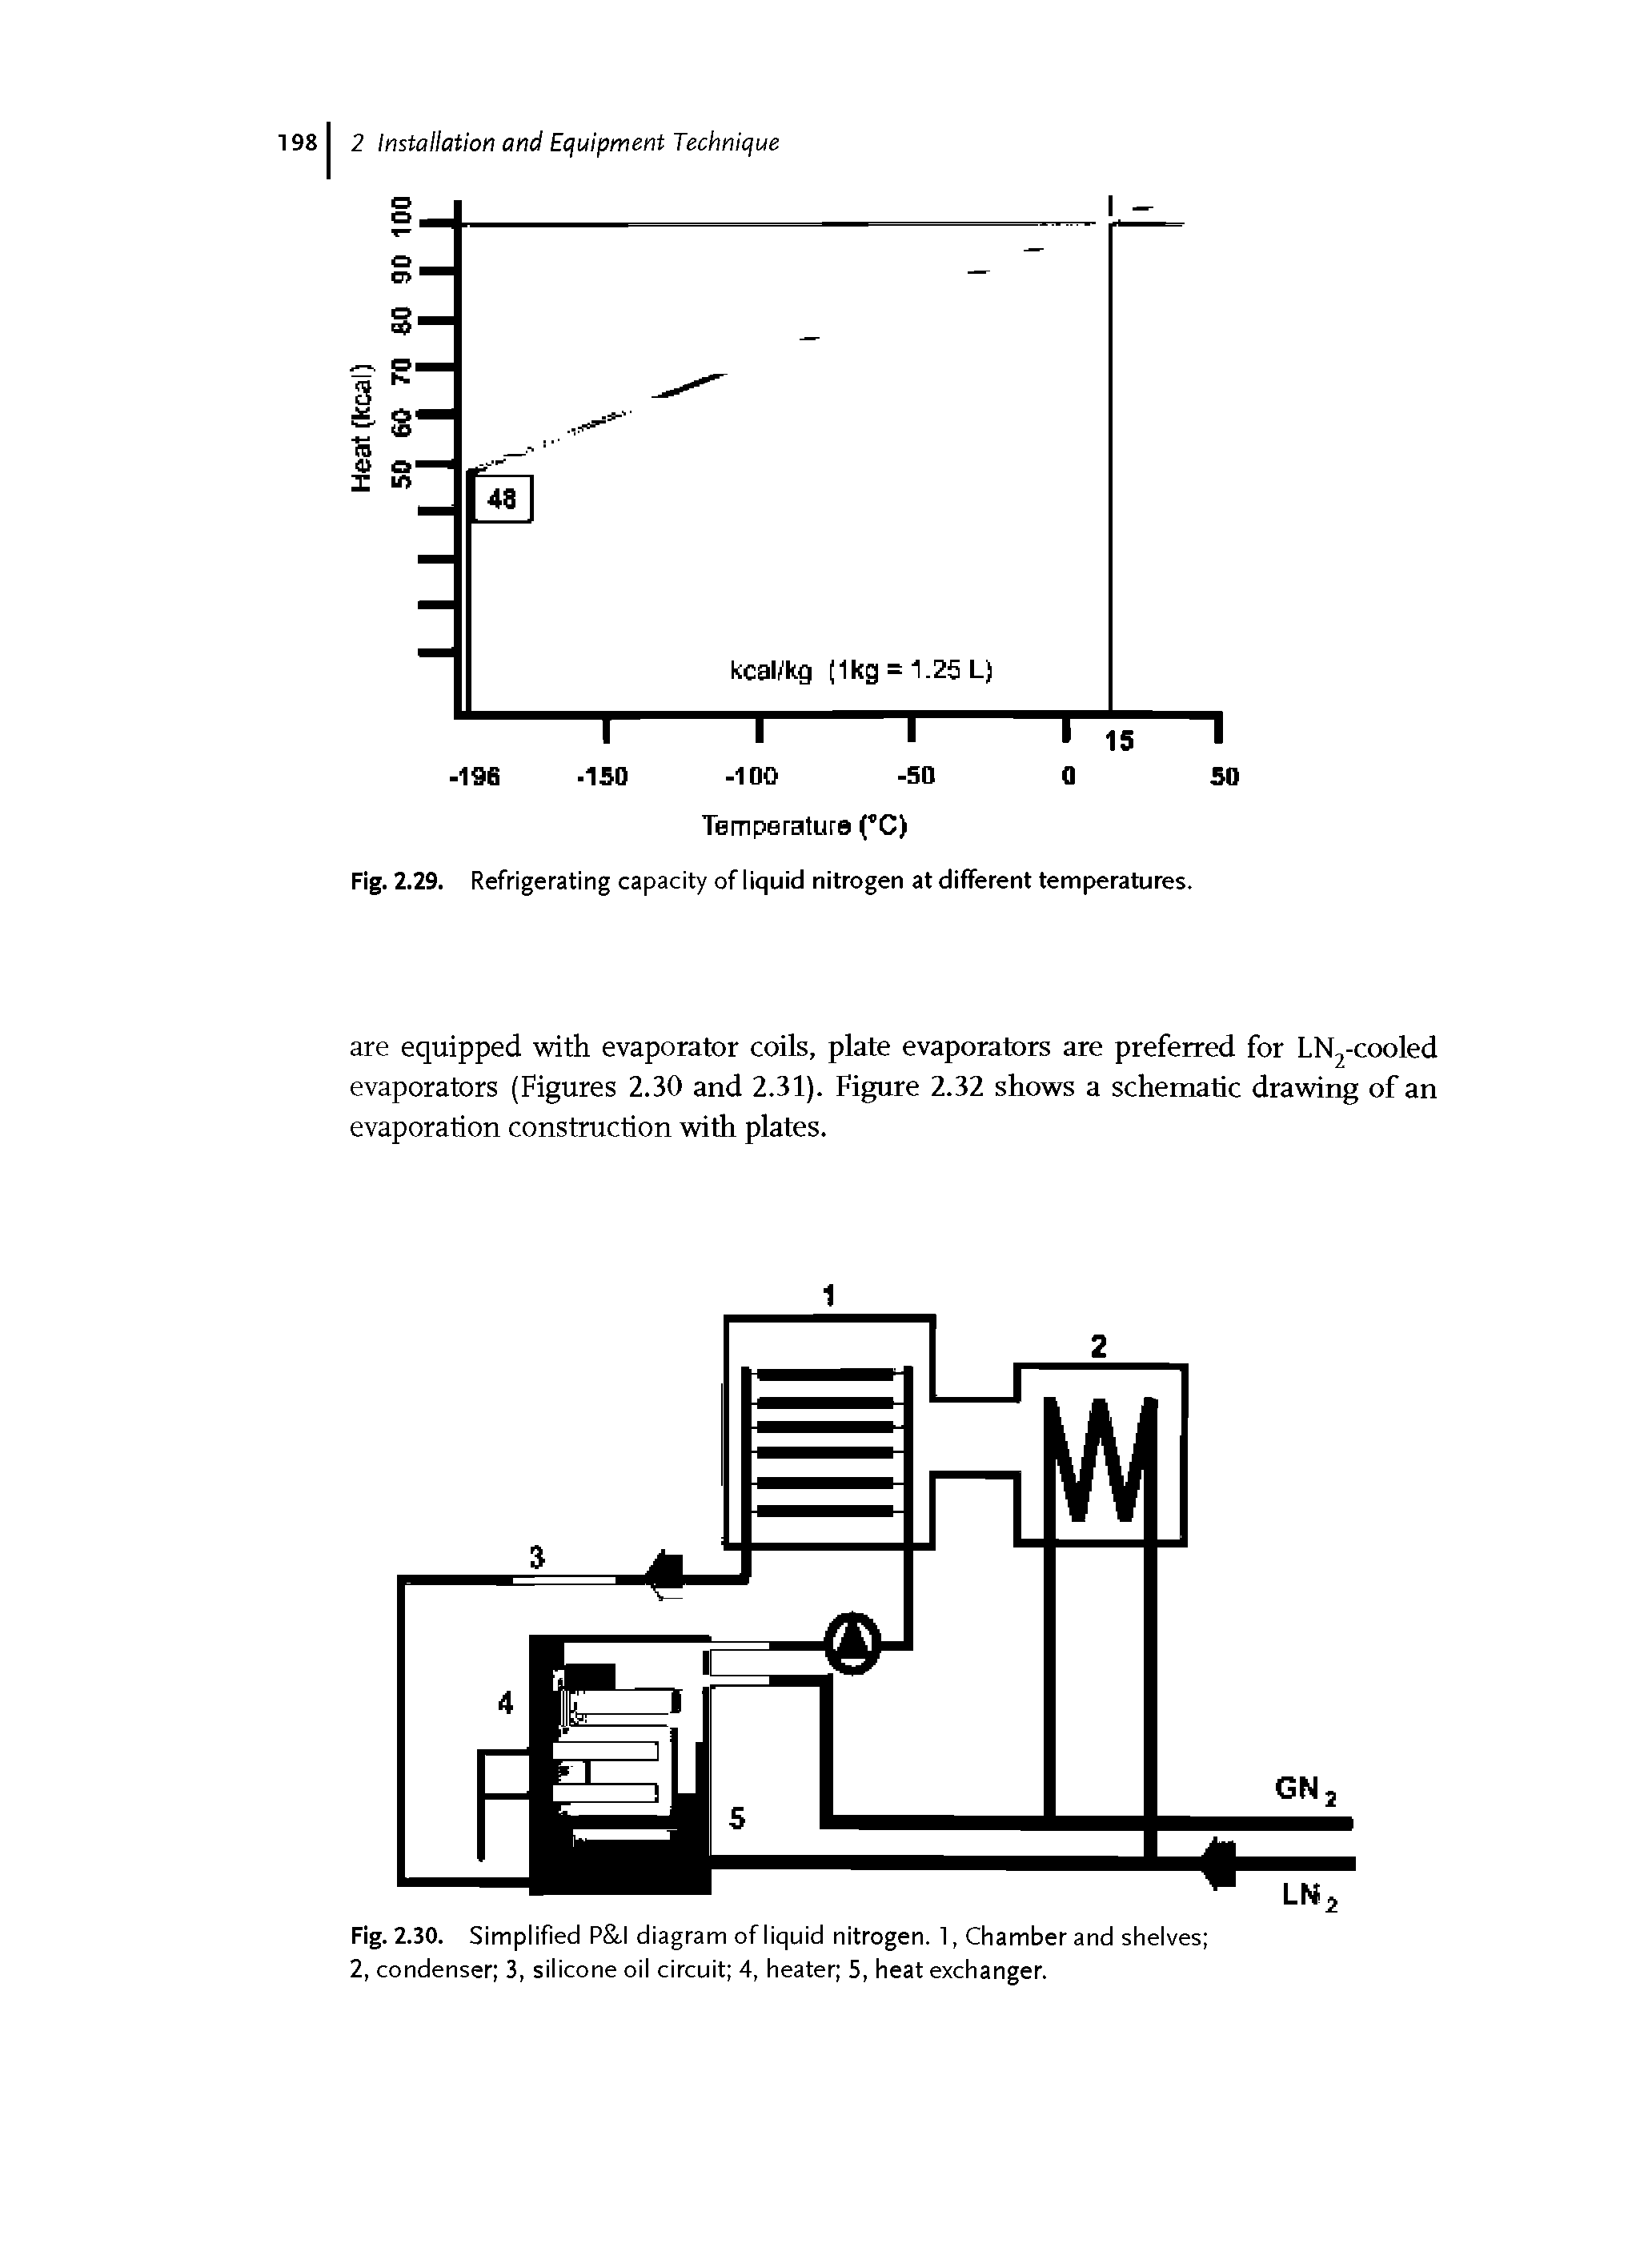 Fig. 2.29. Refrigerating capacity of liquid nitrogen at different temperatures.